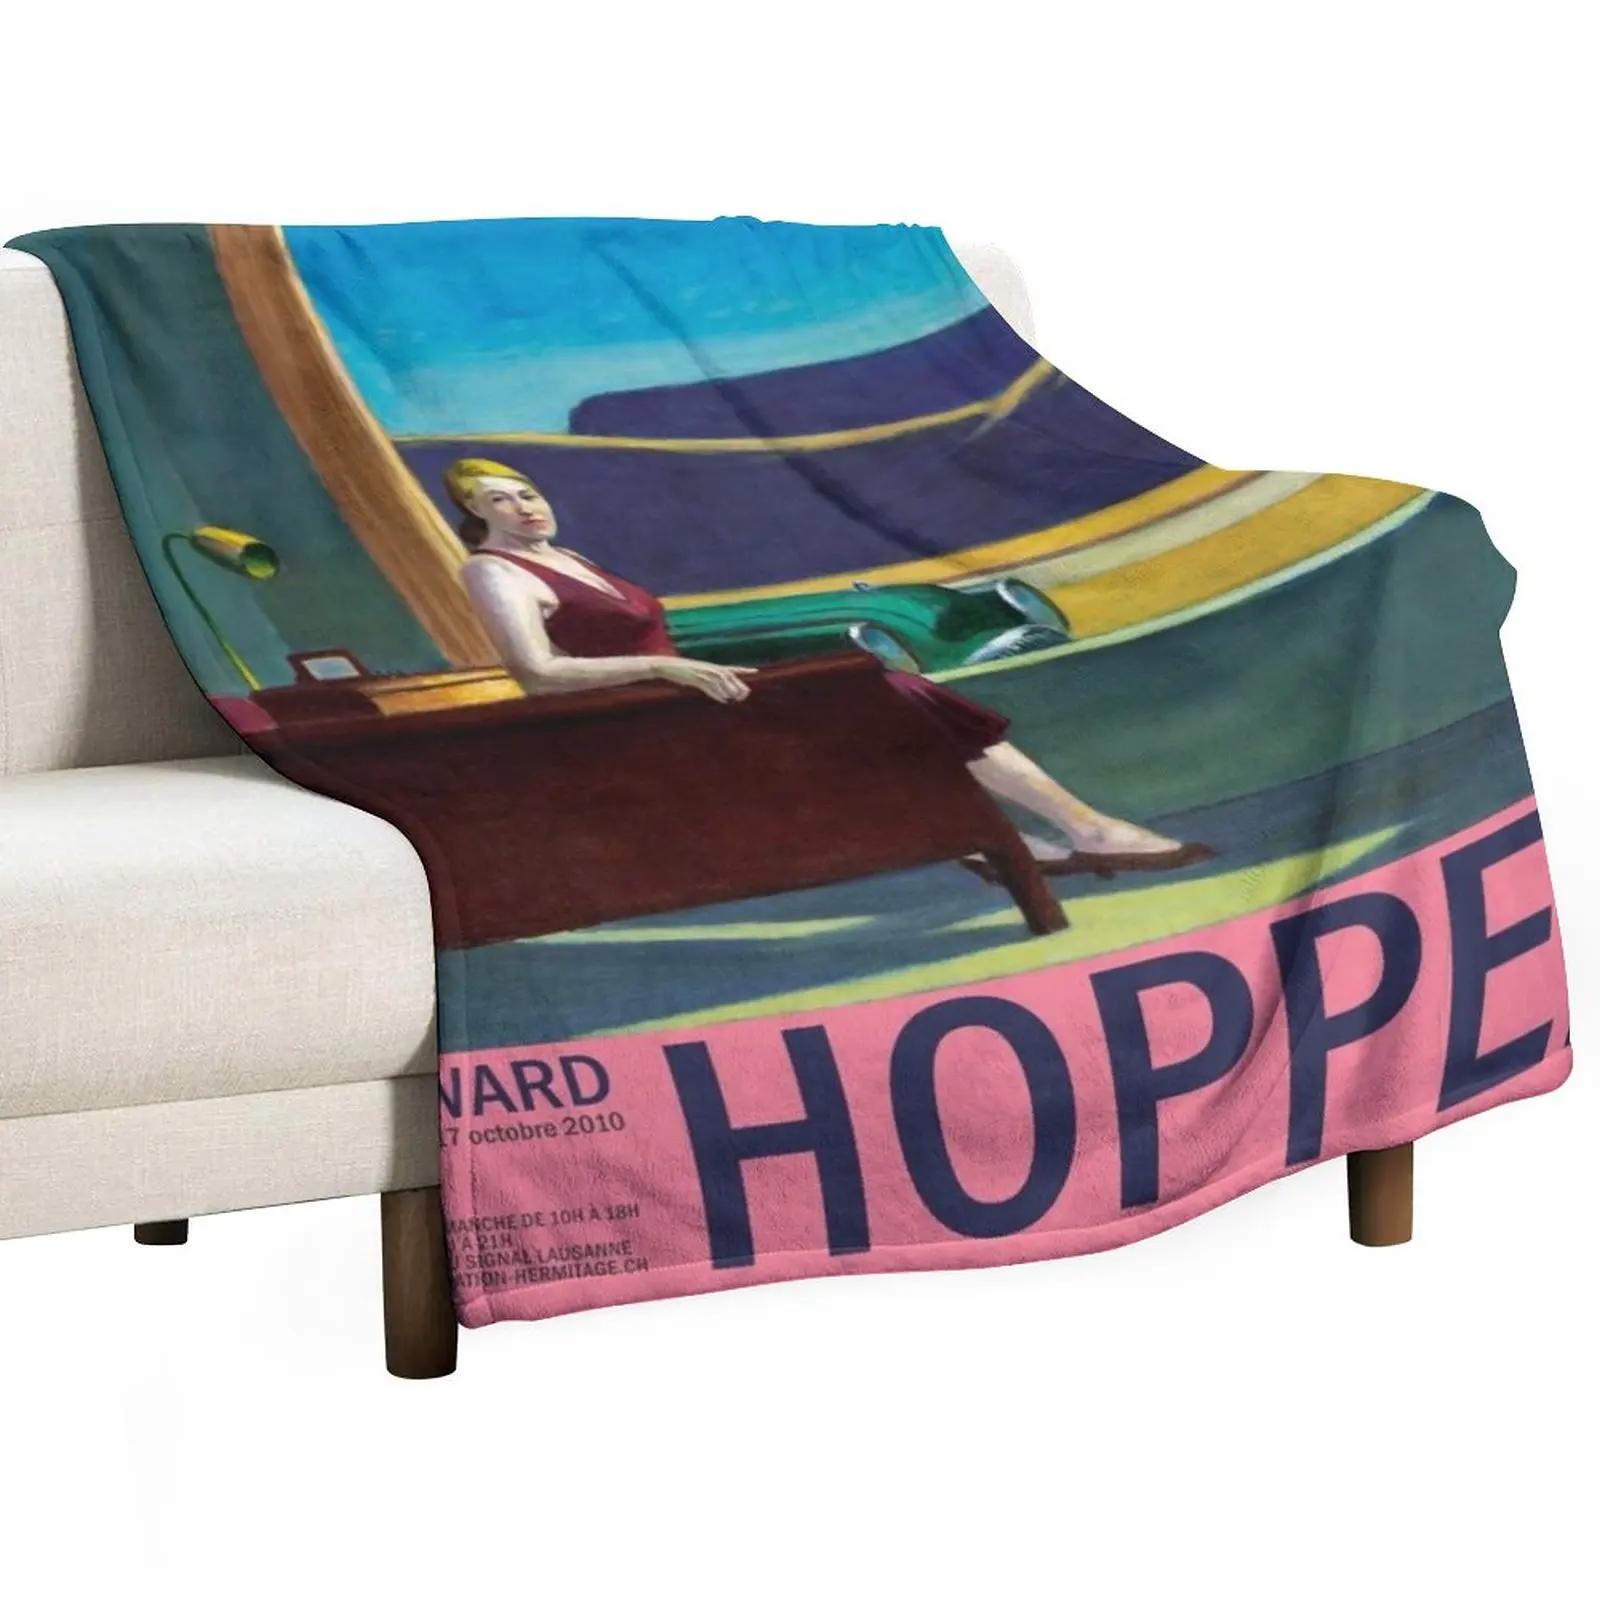 

New Edward Hopper - Western Motel - Minimalist Exhibition Art Poster Throw Blanket Quilt Blanket Fashion Sofa Blankets